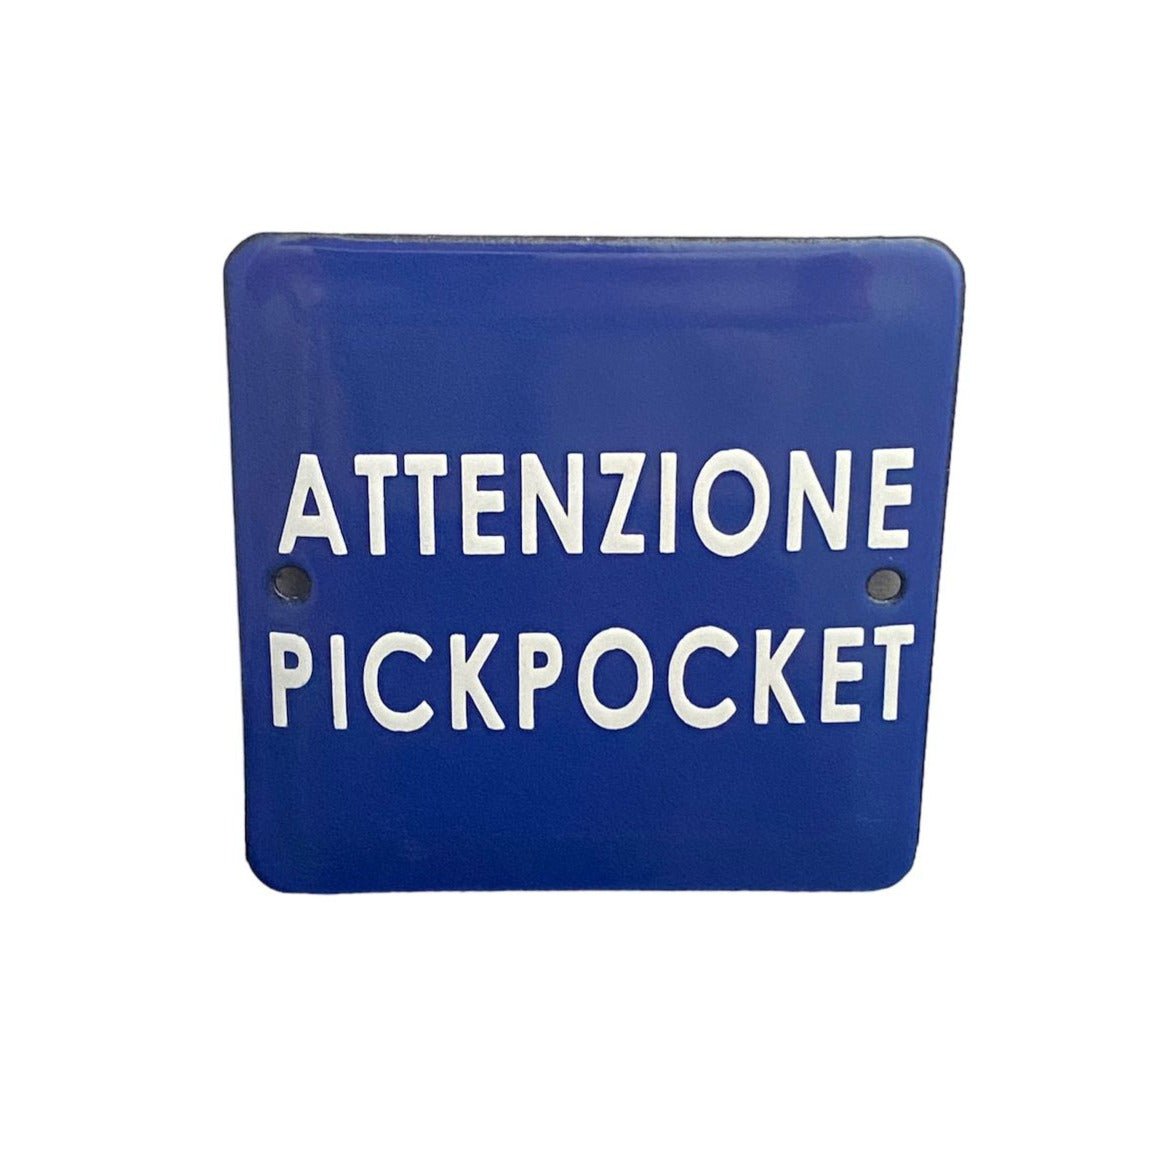 Attenzione Pickpocket!